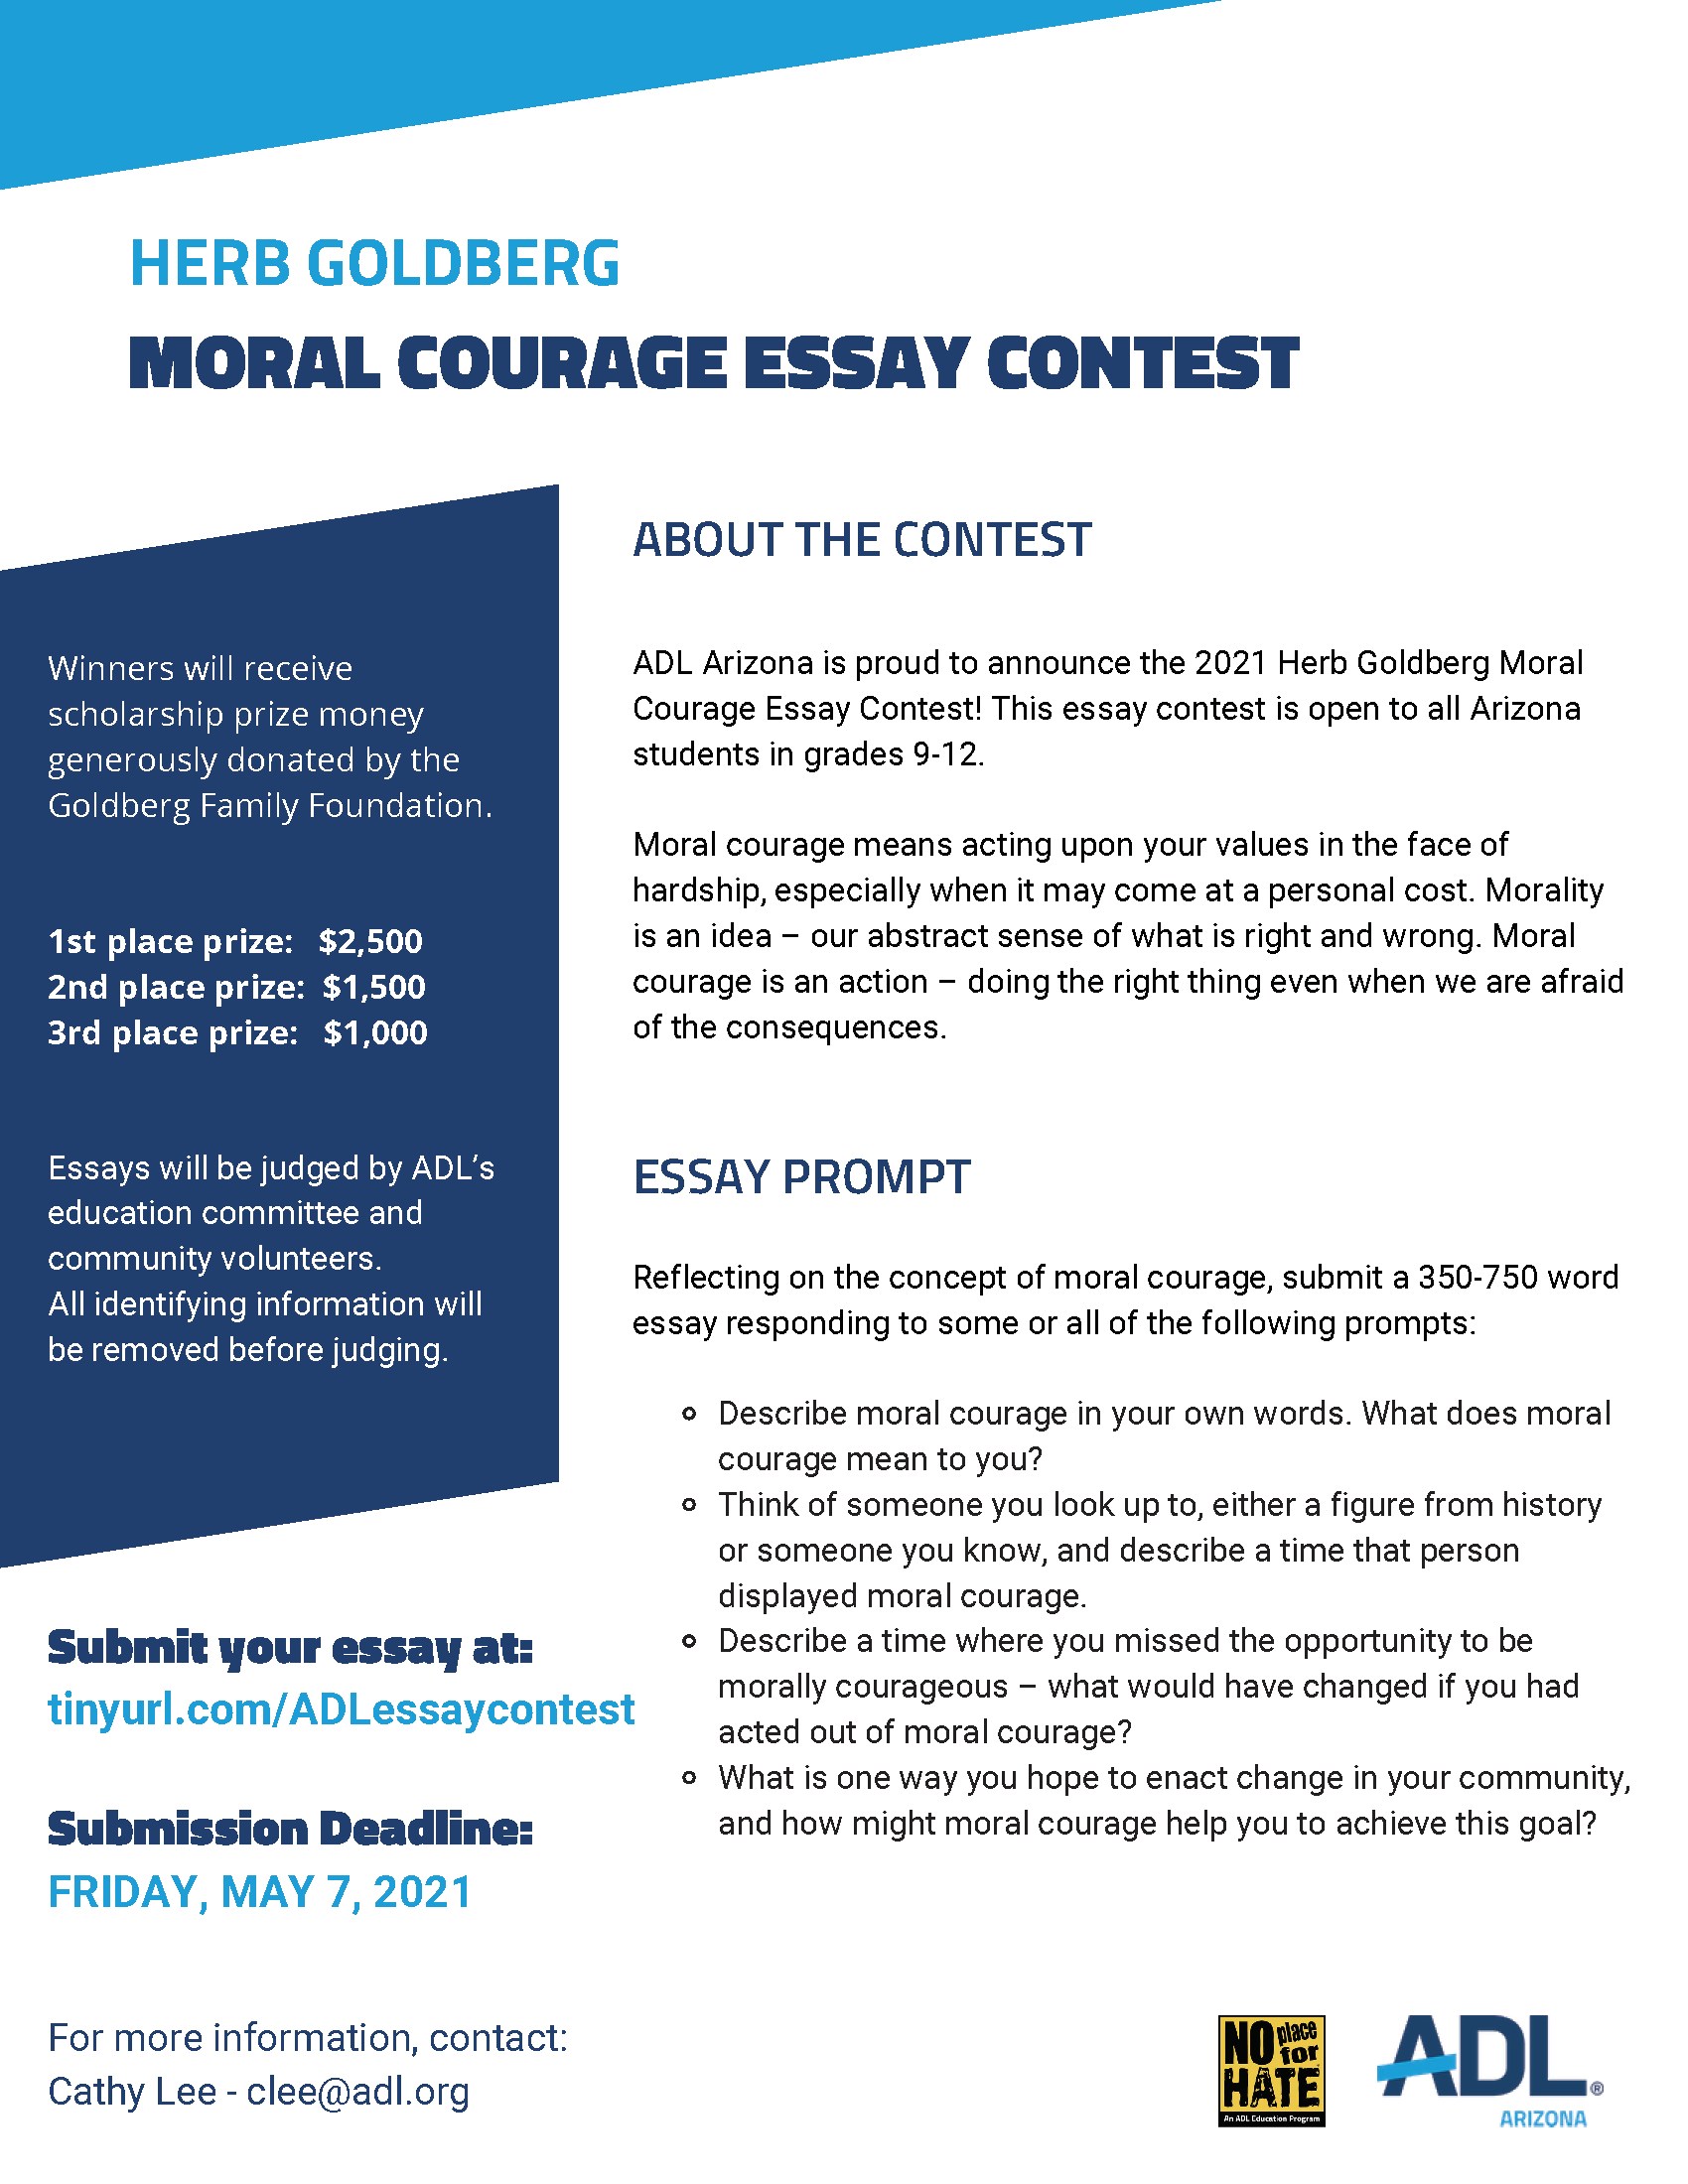 Anti-Defamation League, Herb Goldberg – Moral Courage Essay Contest